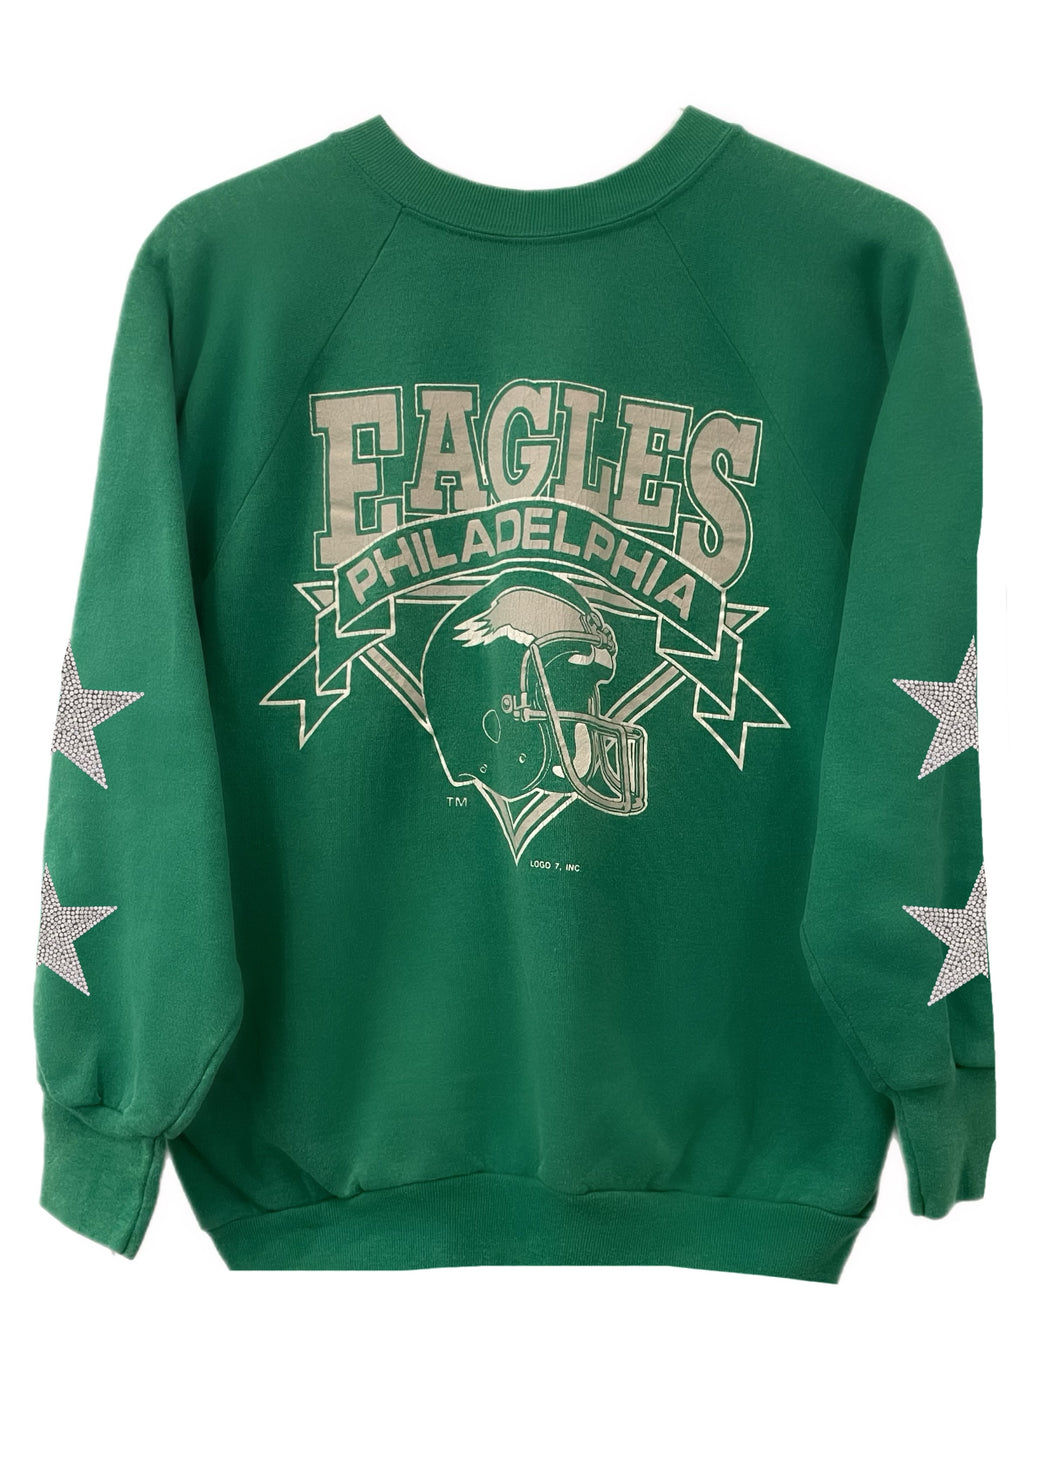 Philadelphia Eagles, NFL One of a KIND Vintage Sweatshirt with Crystal Star Design.